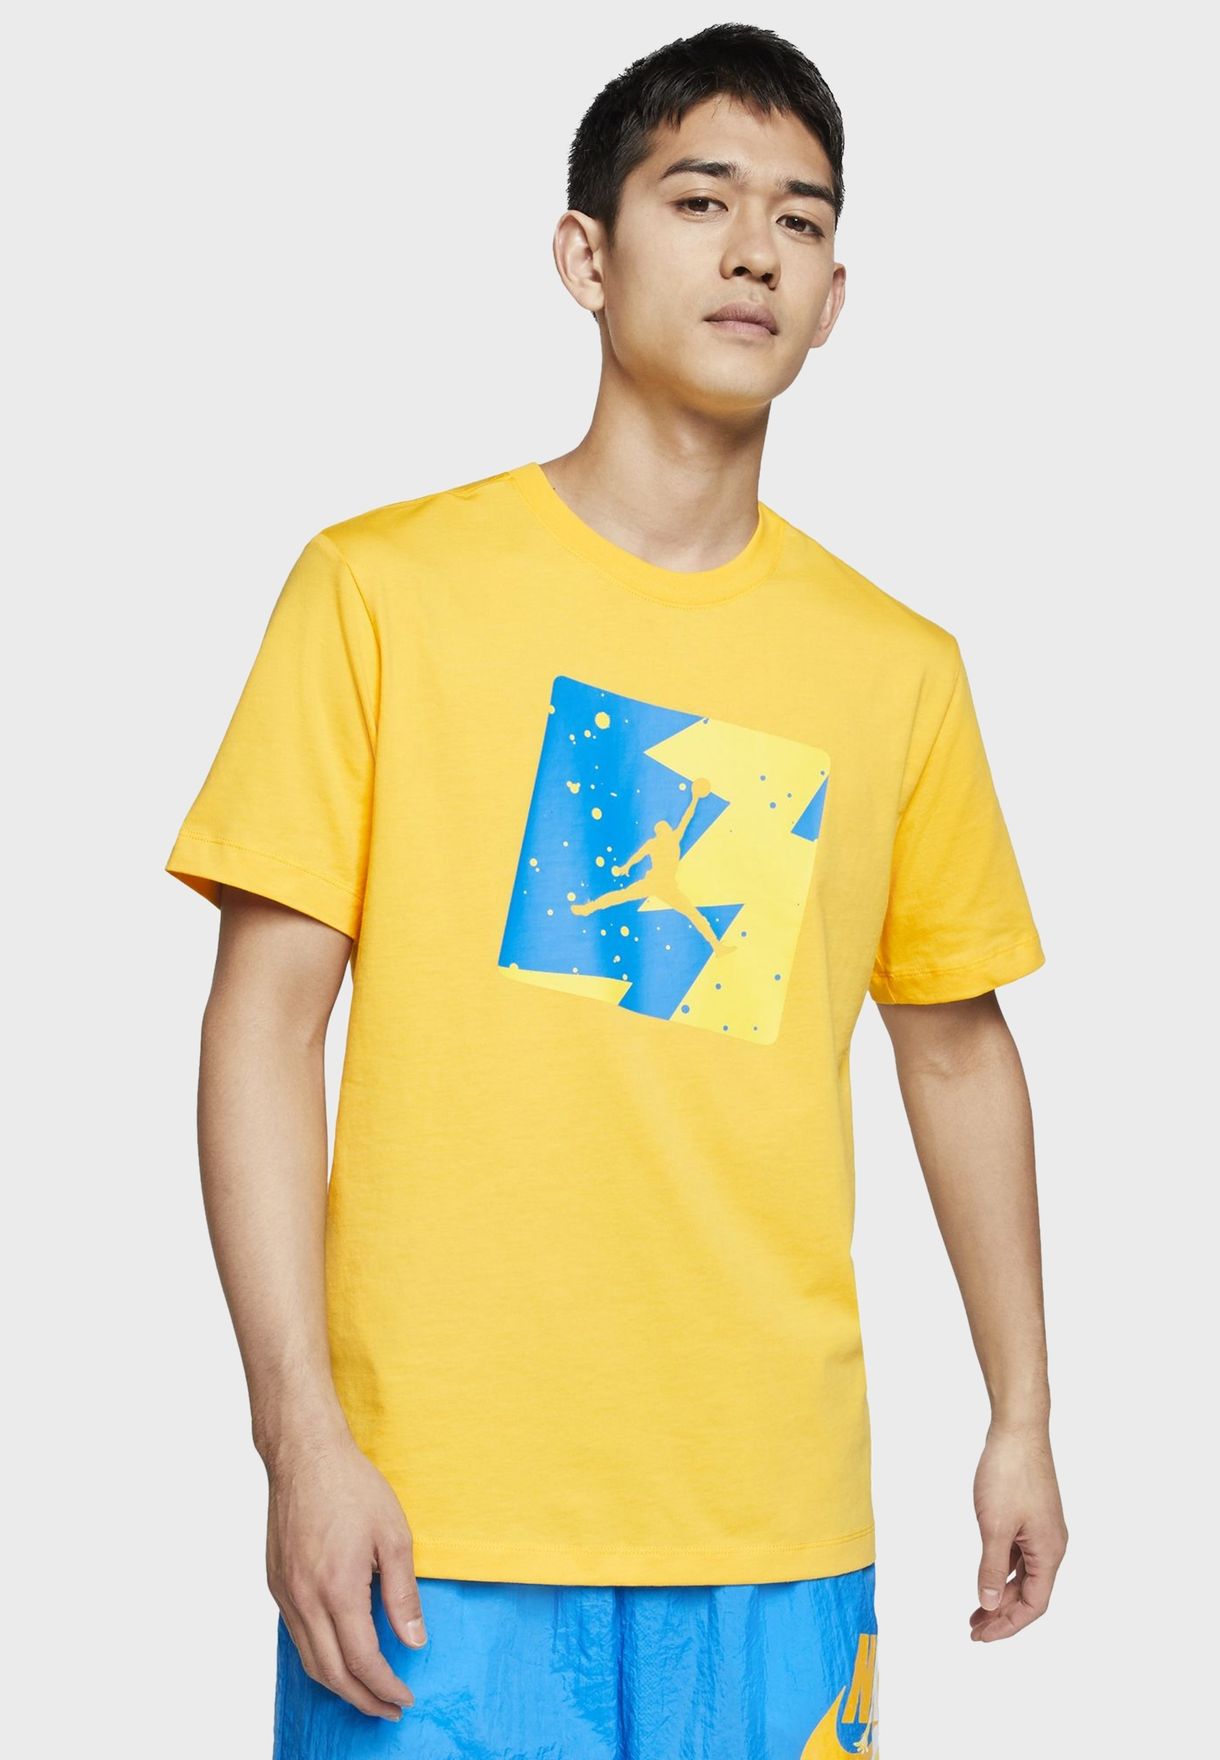 yellow jordan t shirt